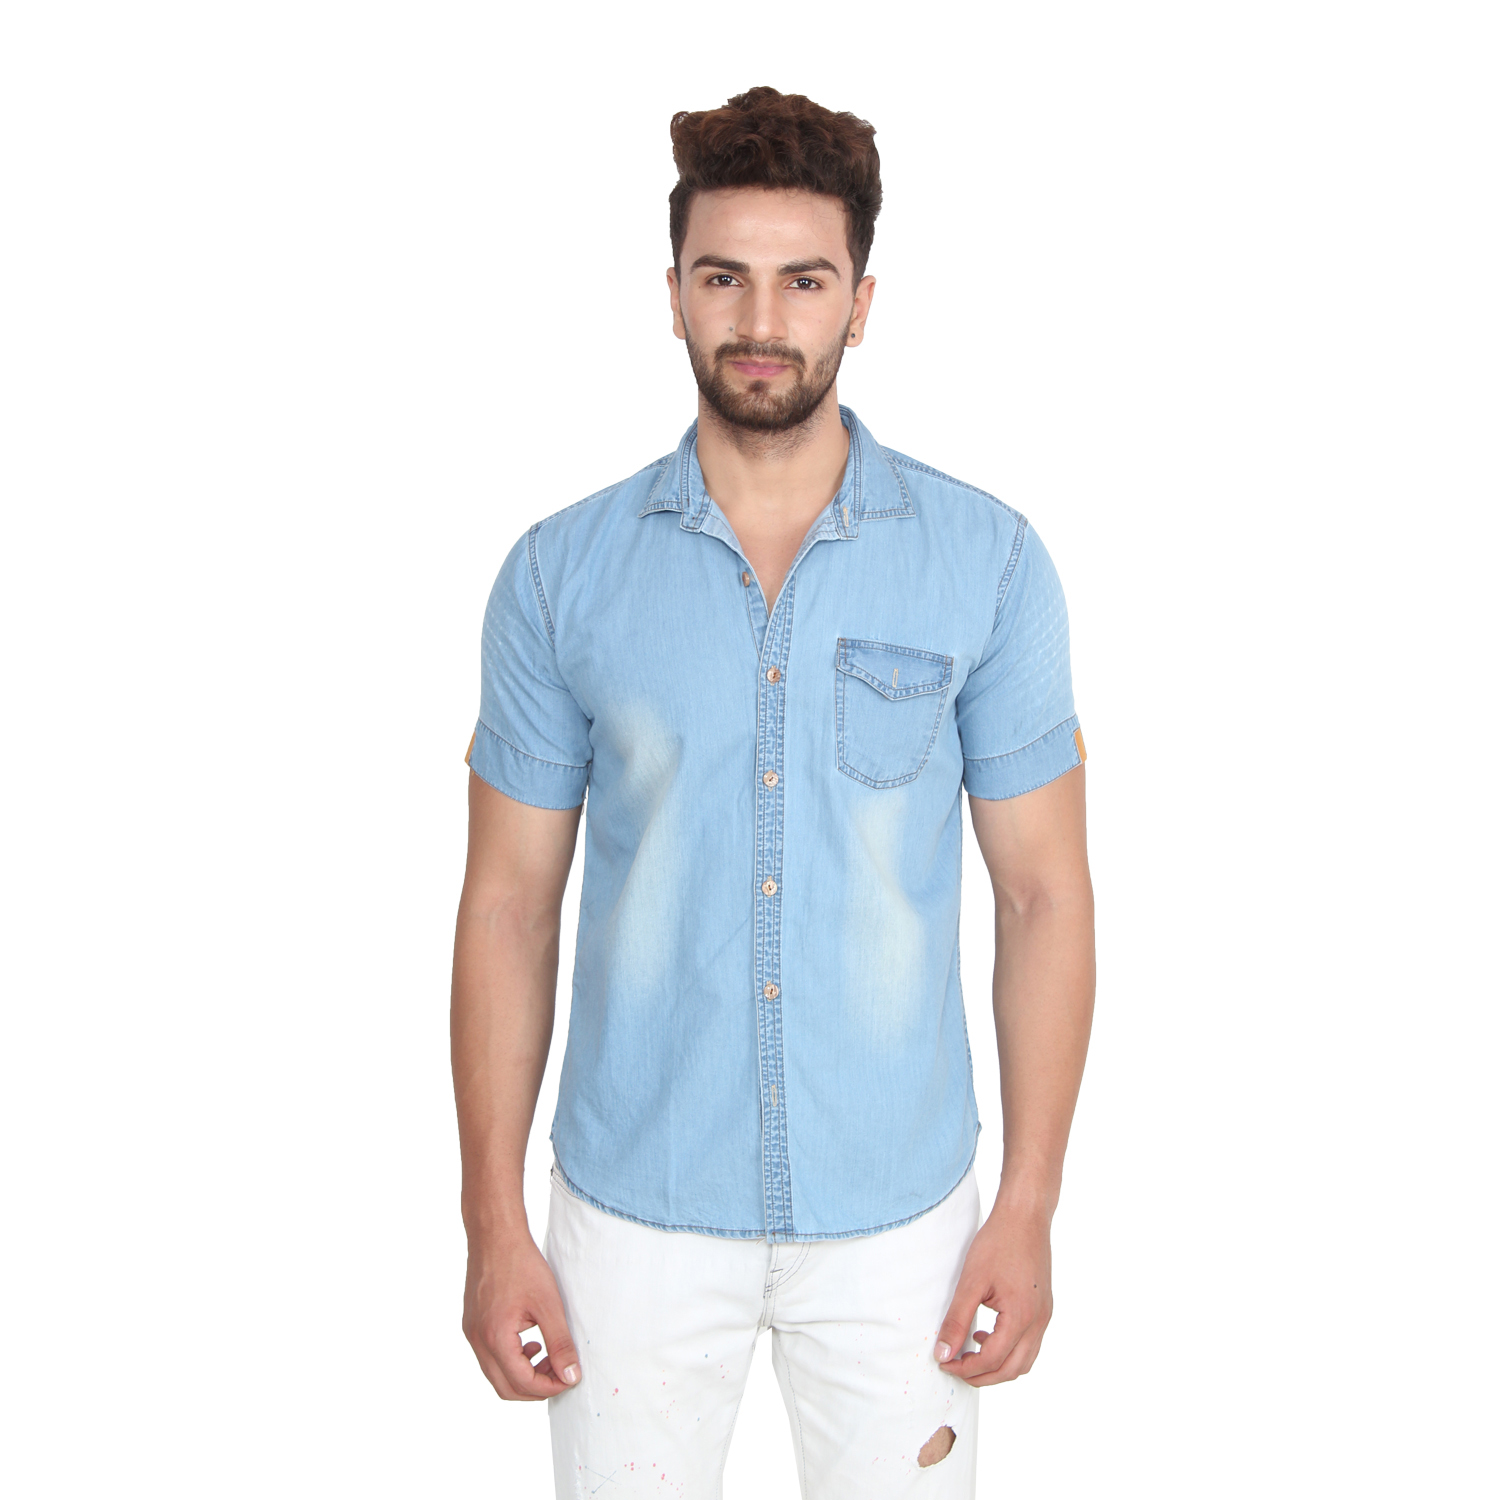 Buy Men's Solid Half Sleeve Casual Denim Shirt Online @ ₹949 from ShopClues